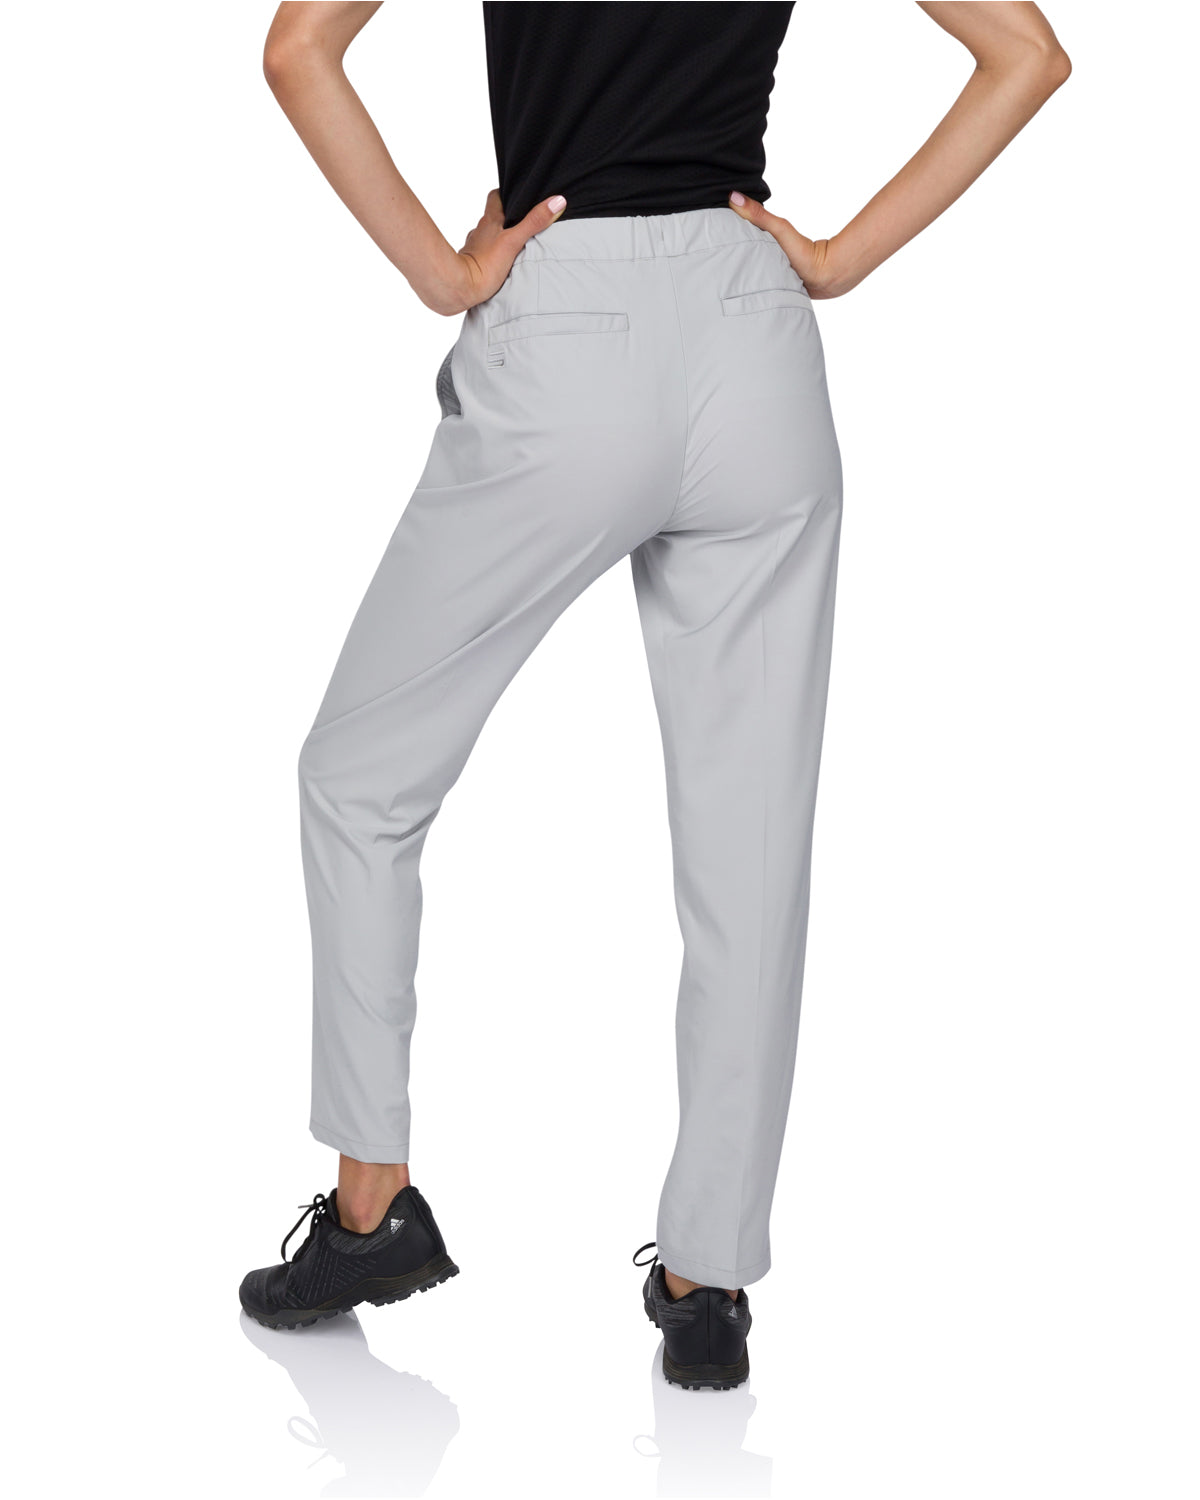 Zenergy Golf by Chico's Women's Golf Capri Pants Size 2 Gray Stretch Active